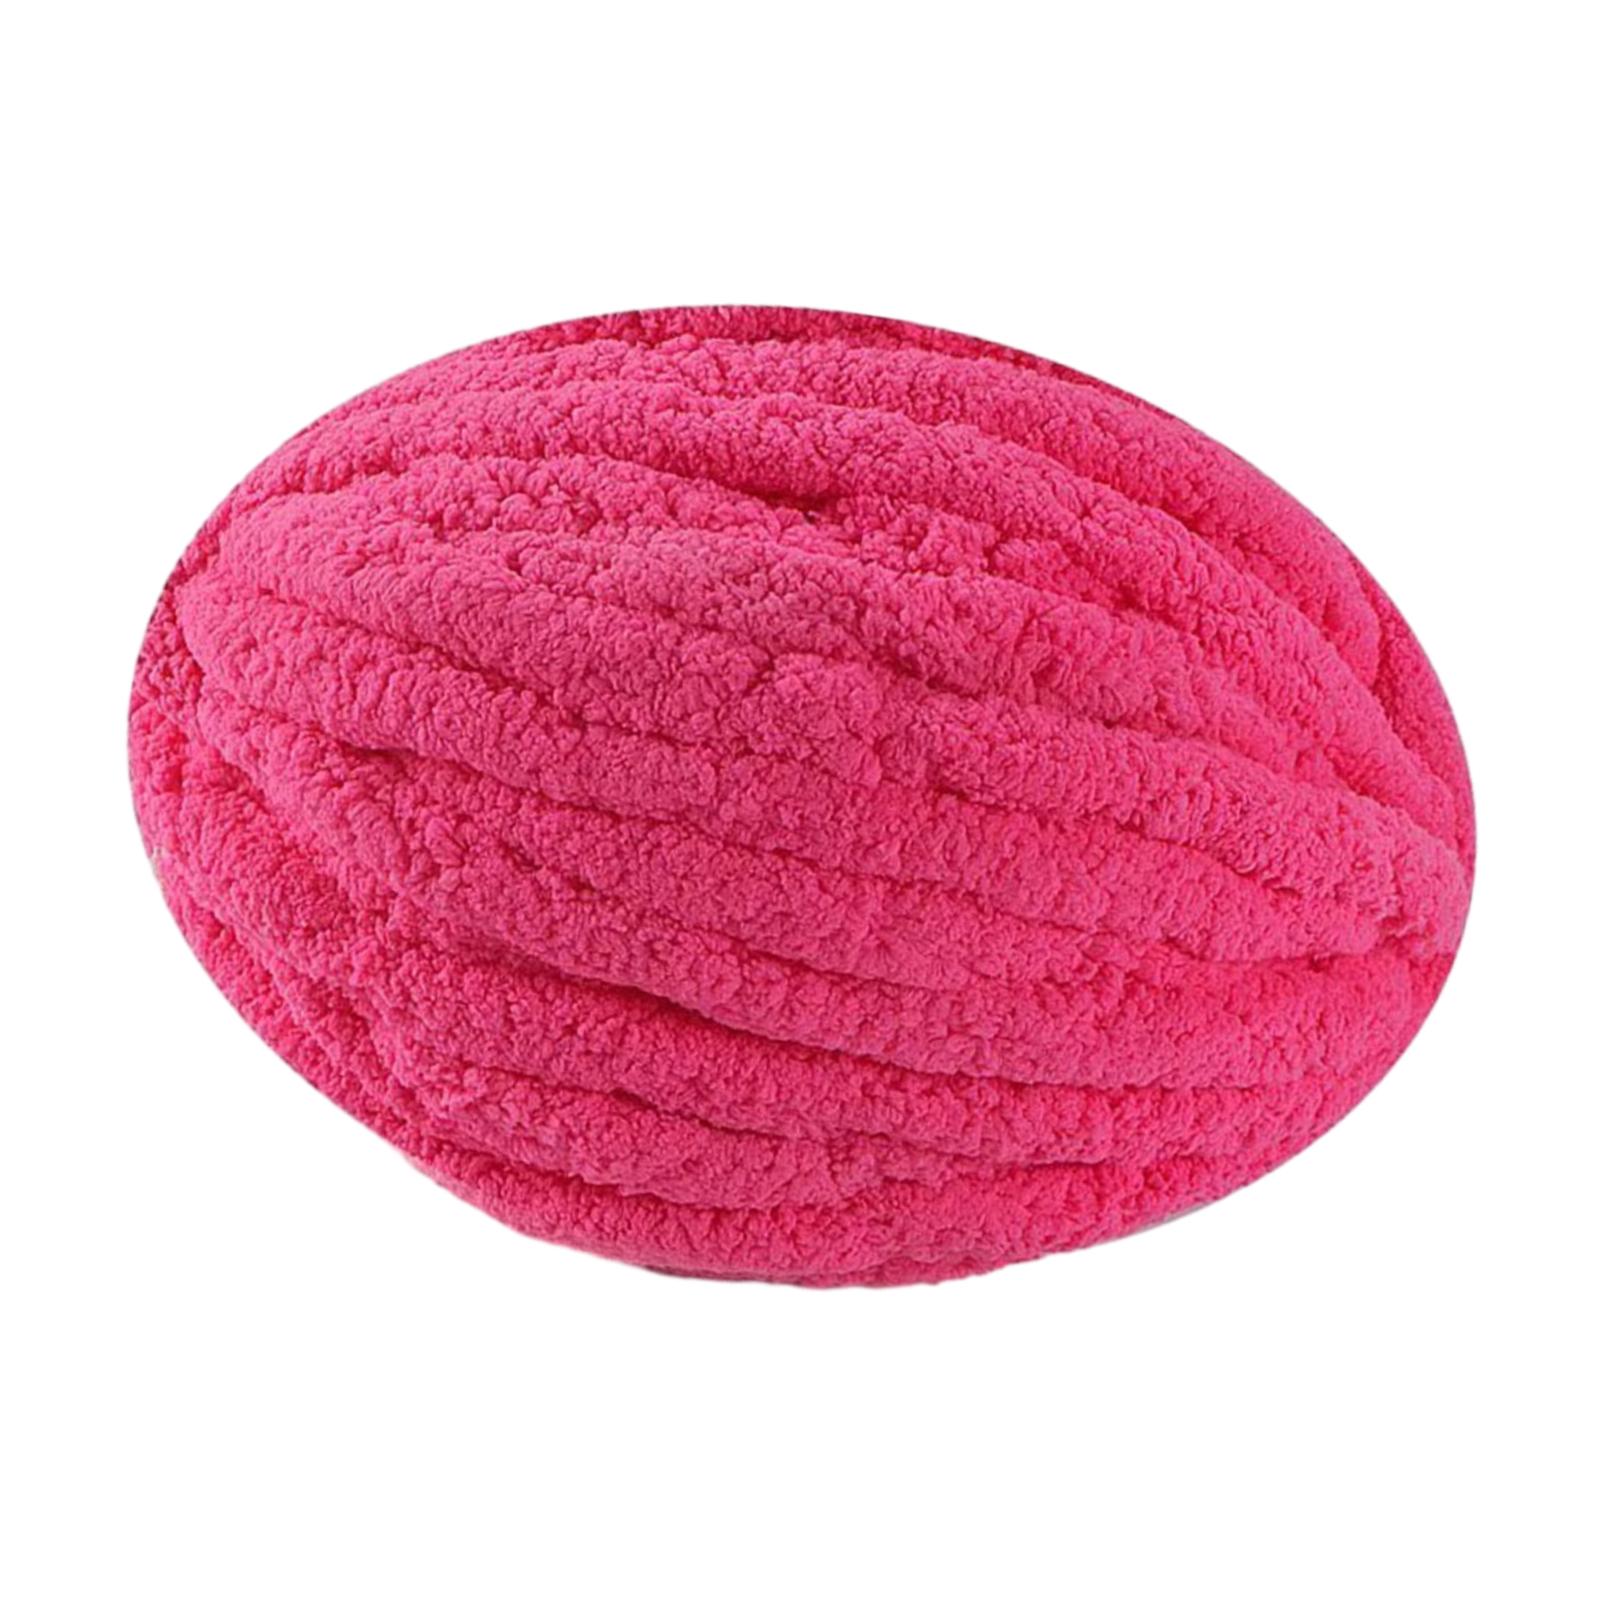 Thick Chunky Yarn, Chunky Wool Yarn, Soft Polyester Yarn, Arm Knitting Yarn,  Weight Yarn, Knit Yarn for Knitted Blanket/ Sweater/ Weaving Macrame Rose  Pink 